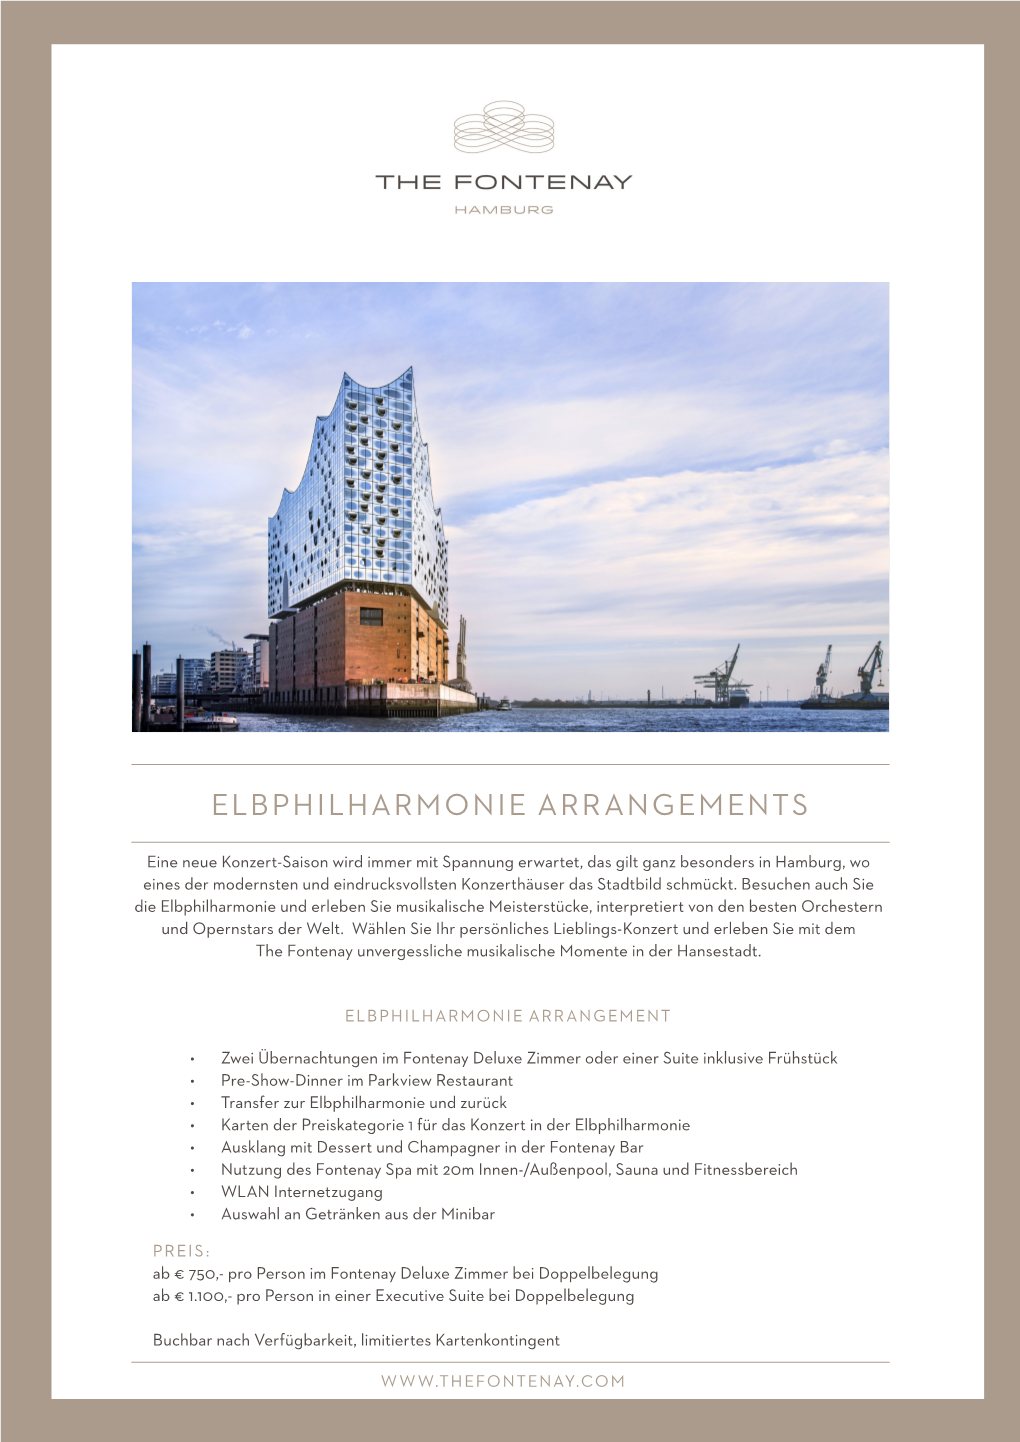 Elbphilharmonie Arrangements